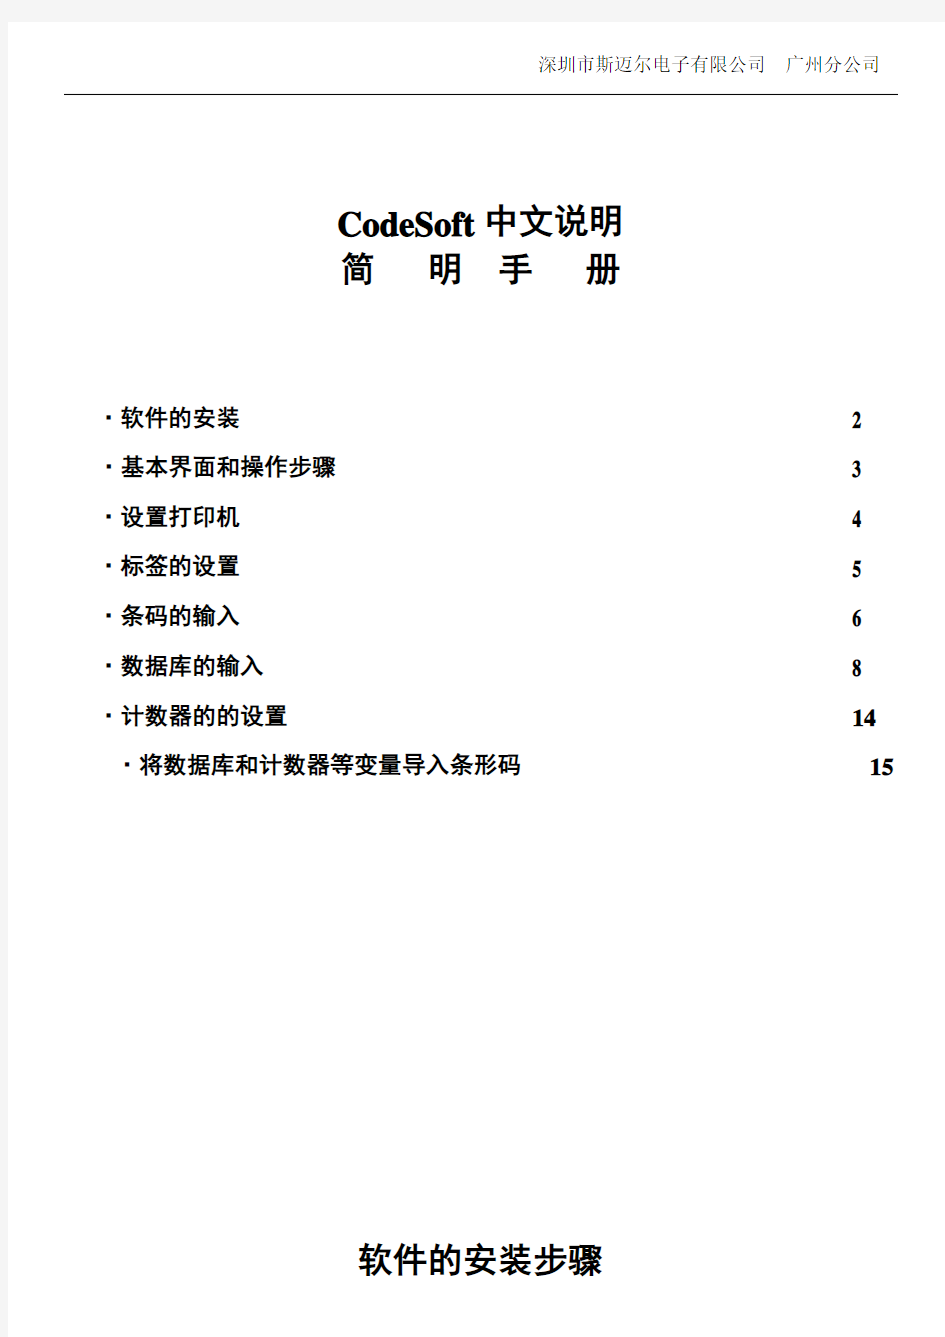 codesoft 6.0中文使用手册2